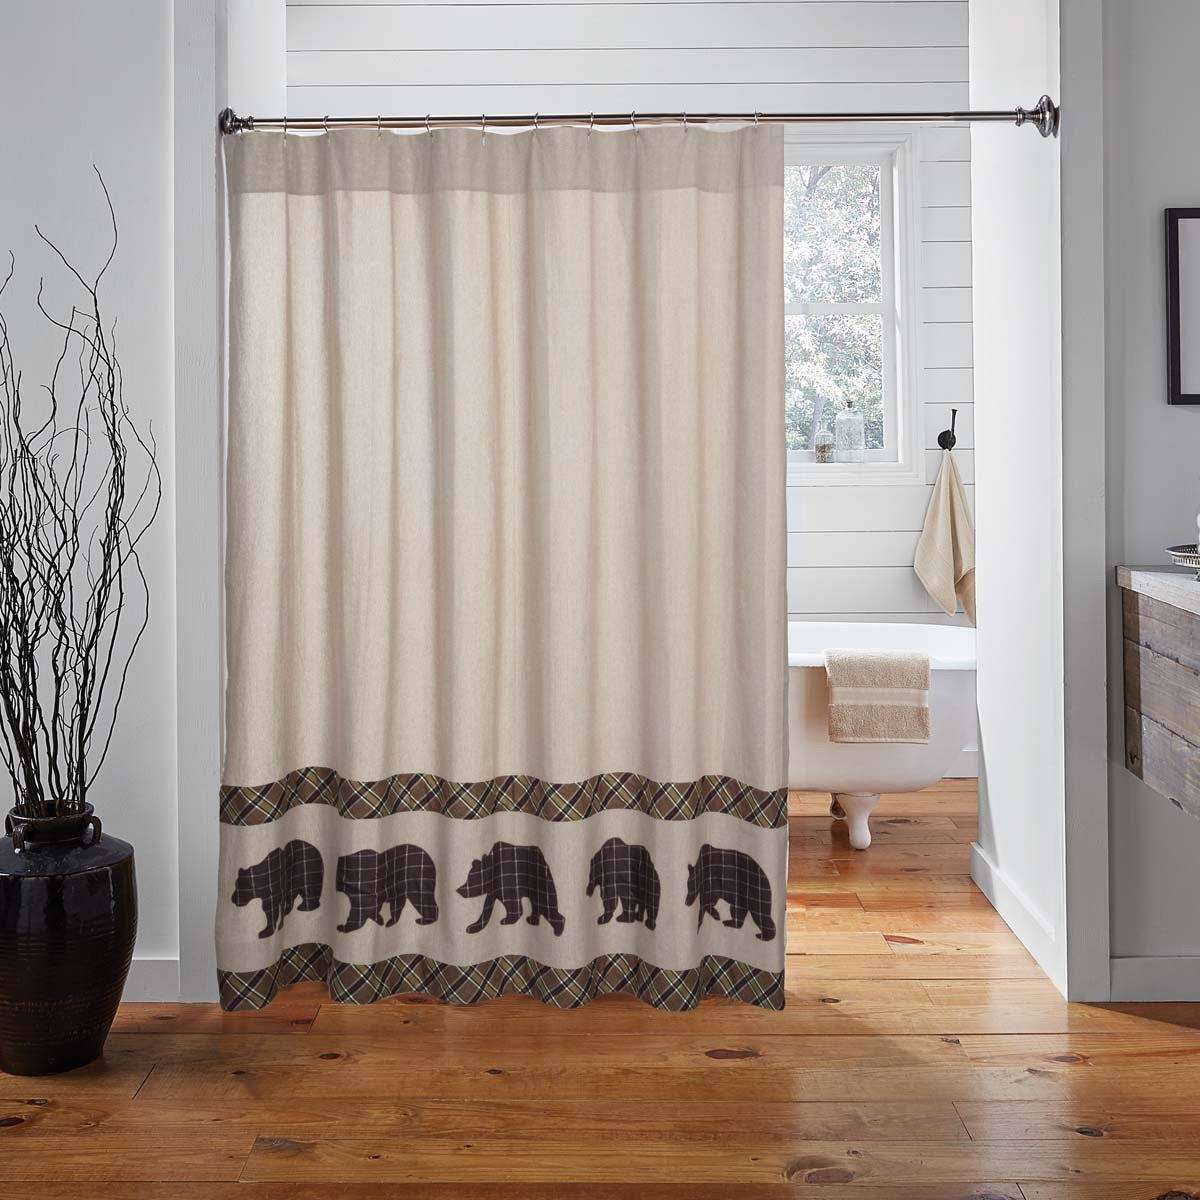 Wyatt Bear Shower Curtain 72"x72" curtain VHC Brands 